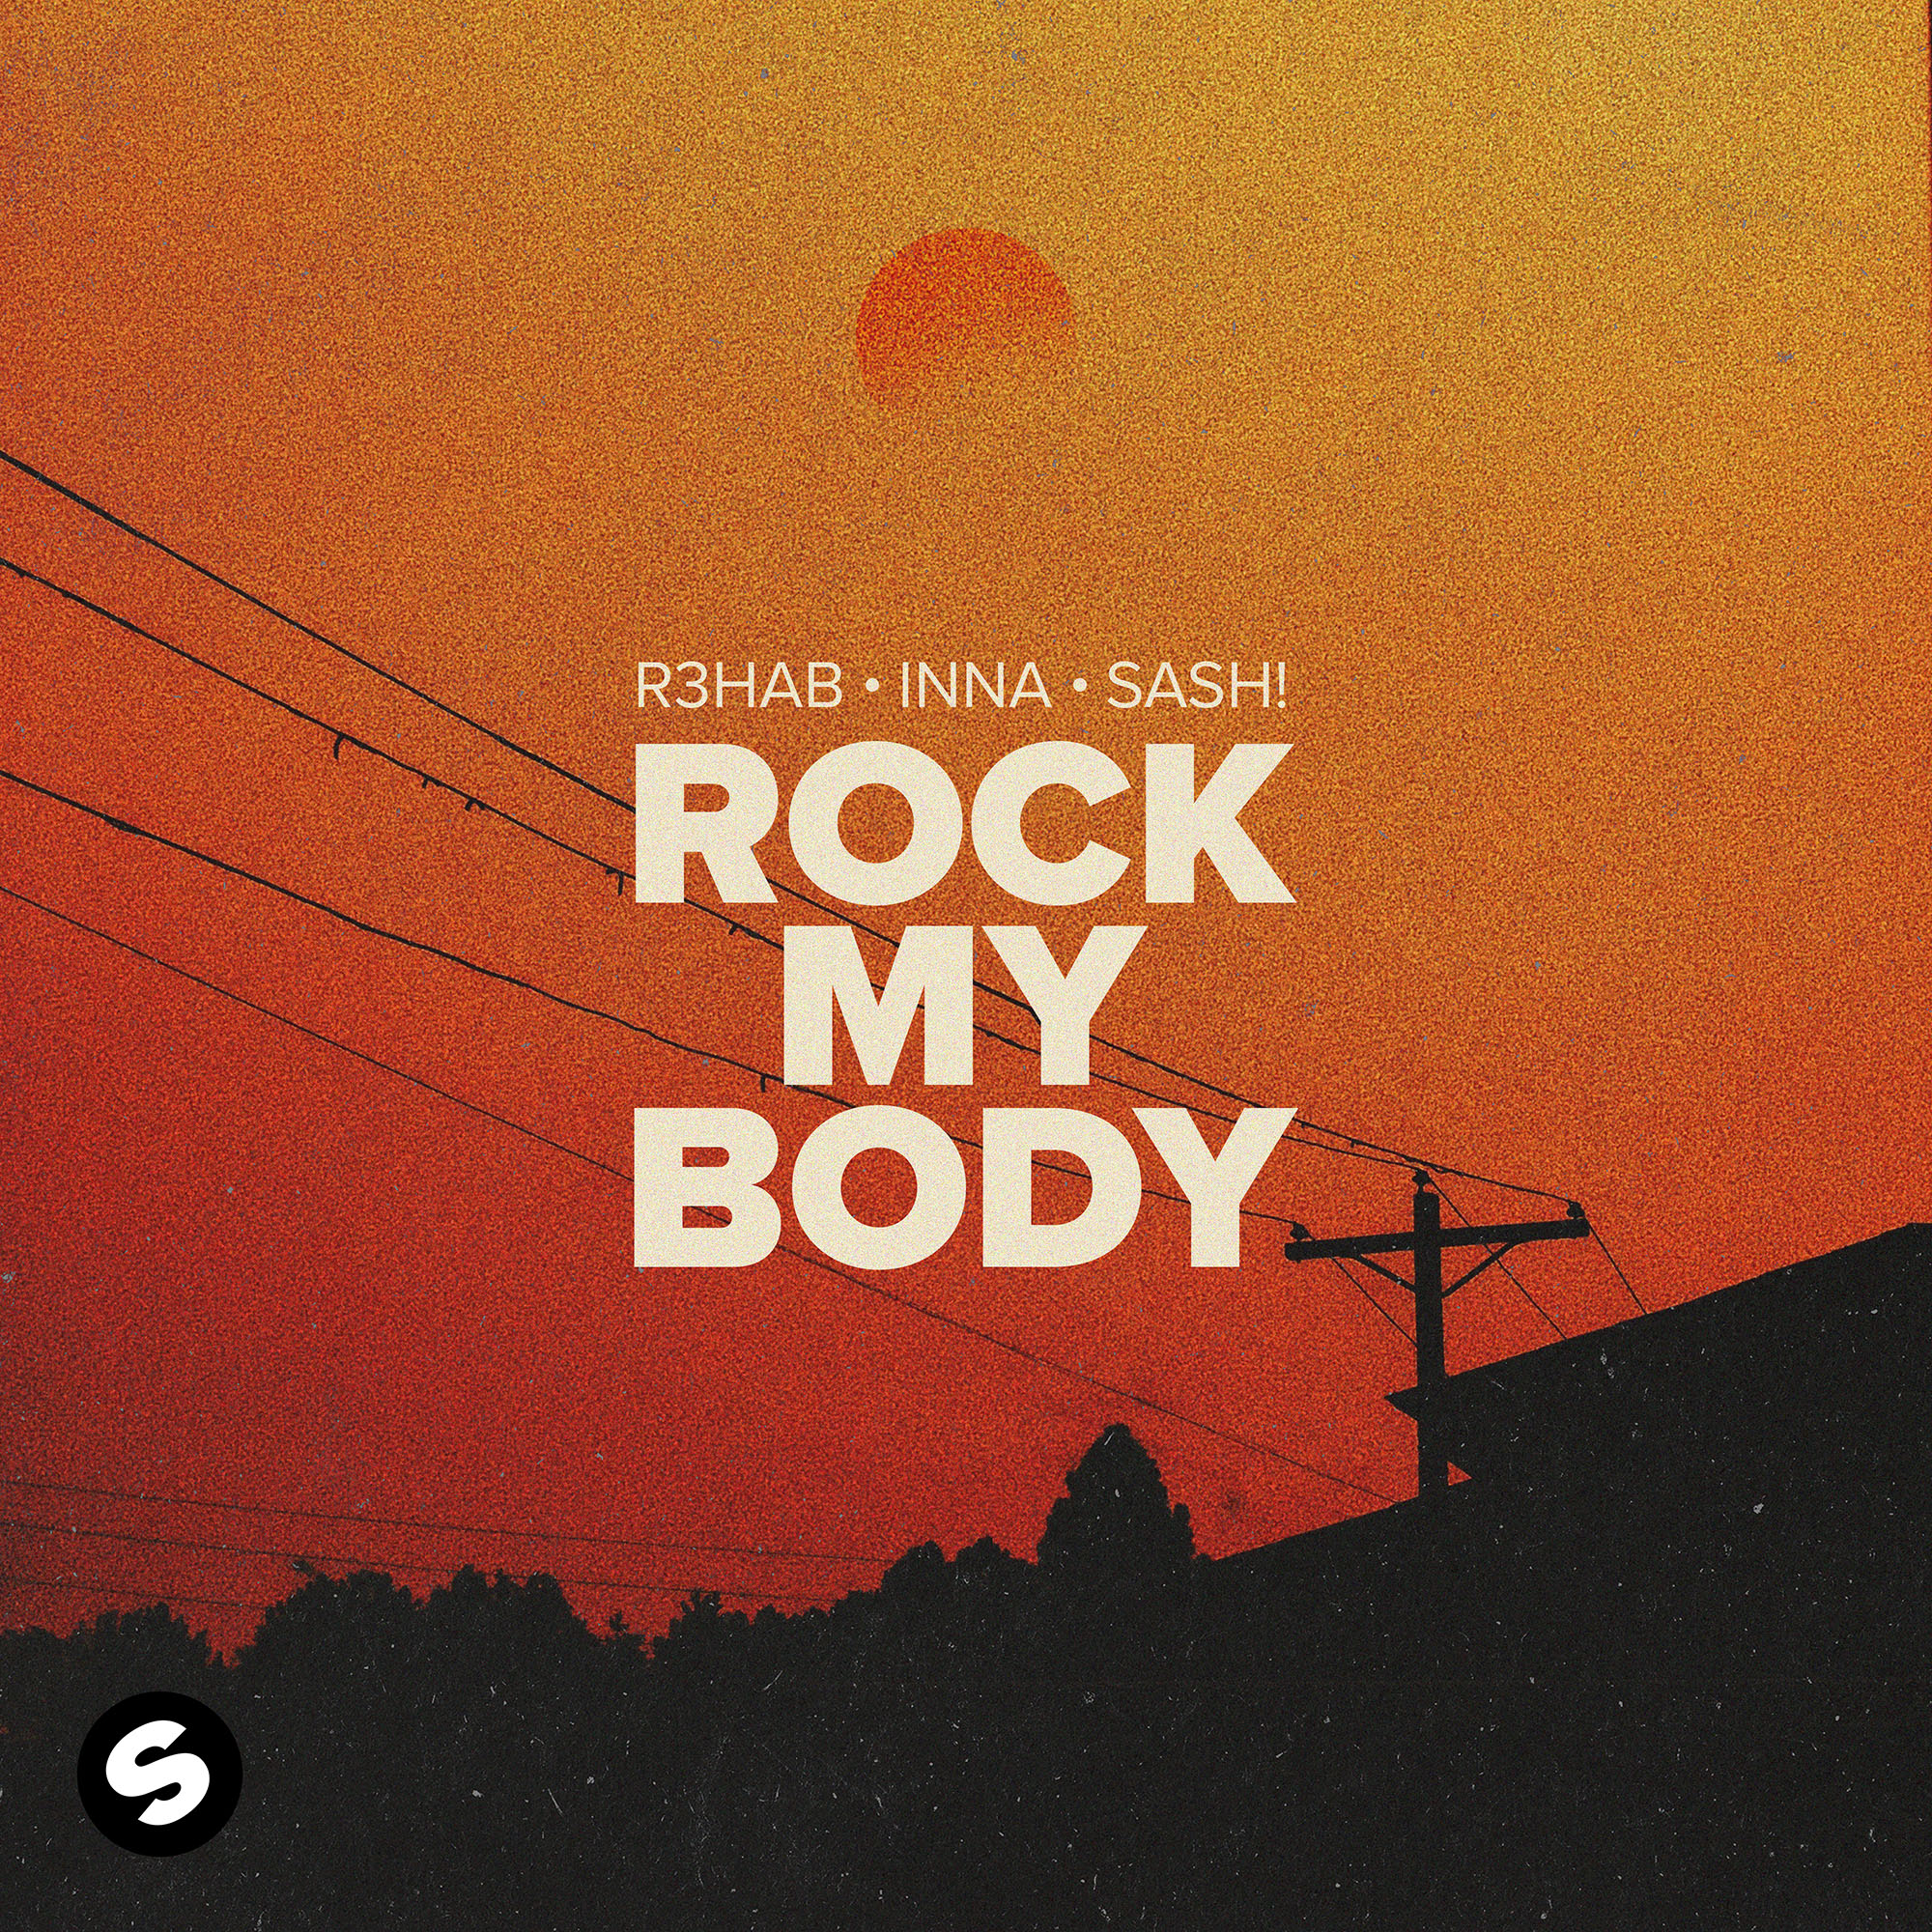 R3hab & Inna & Sash - Rock My Body